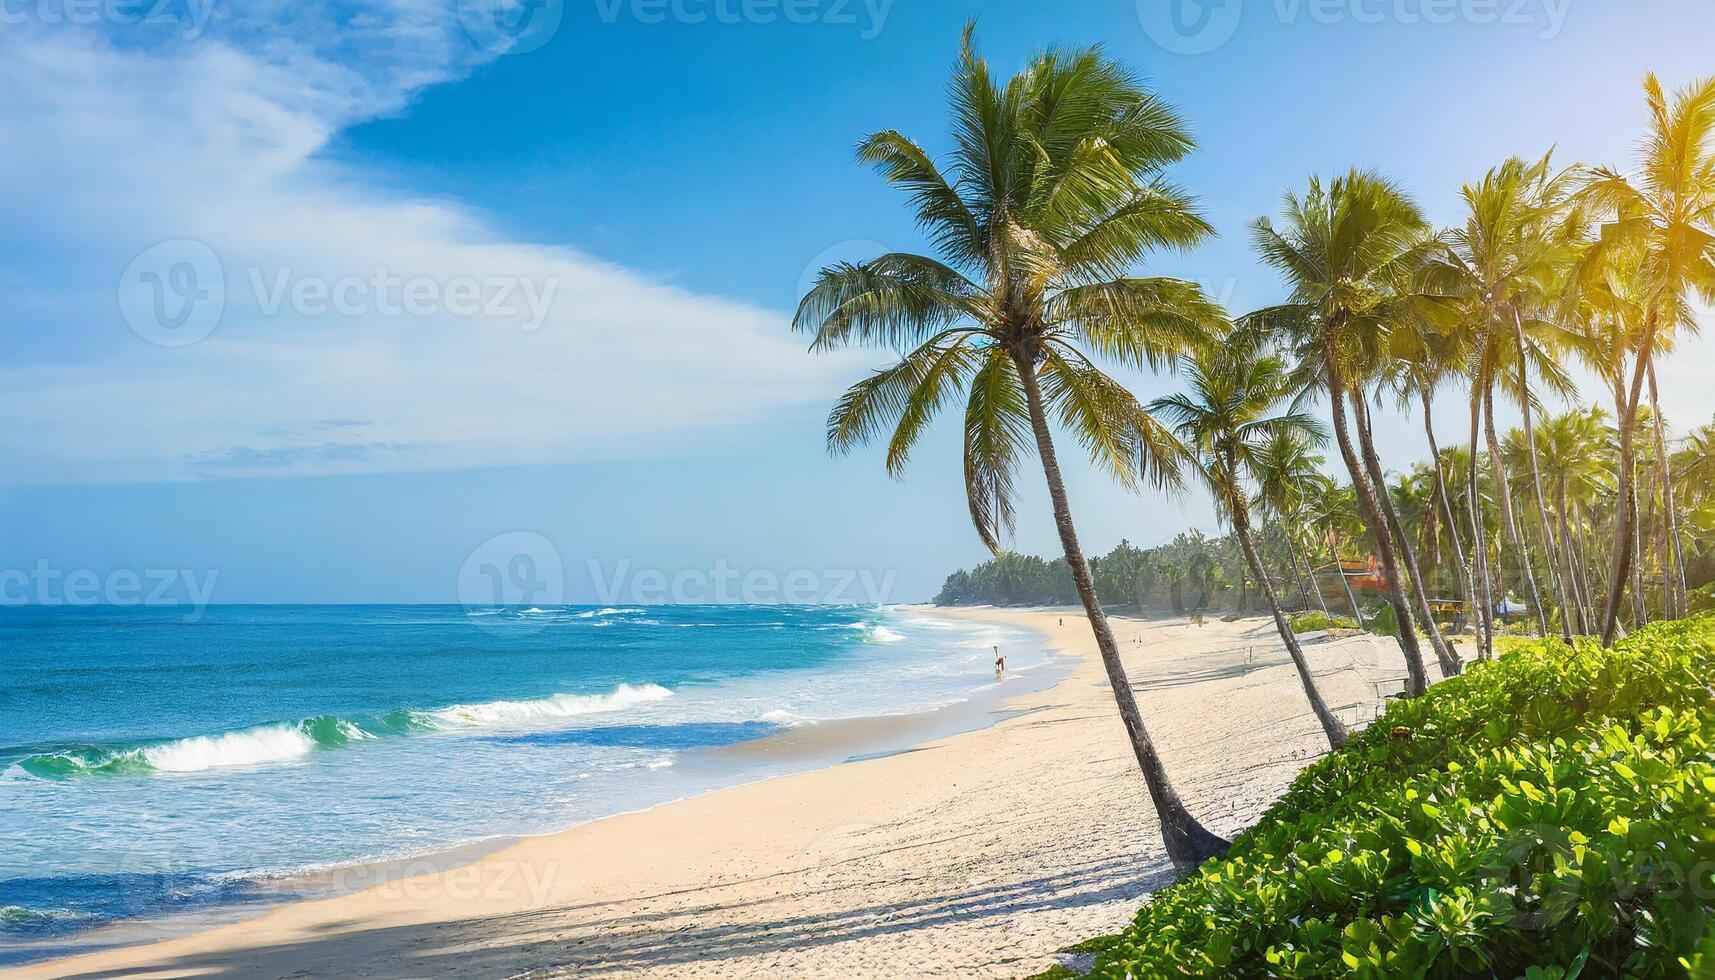 Tropical beach, ocean shore, palms, blue sea, vacation concept photo